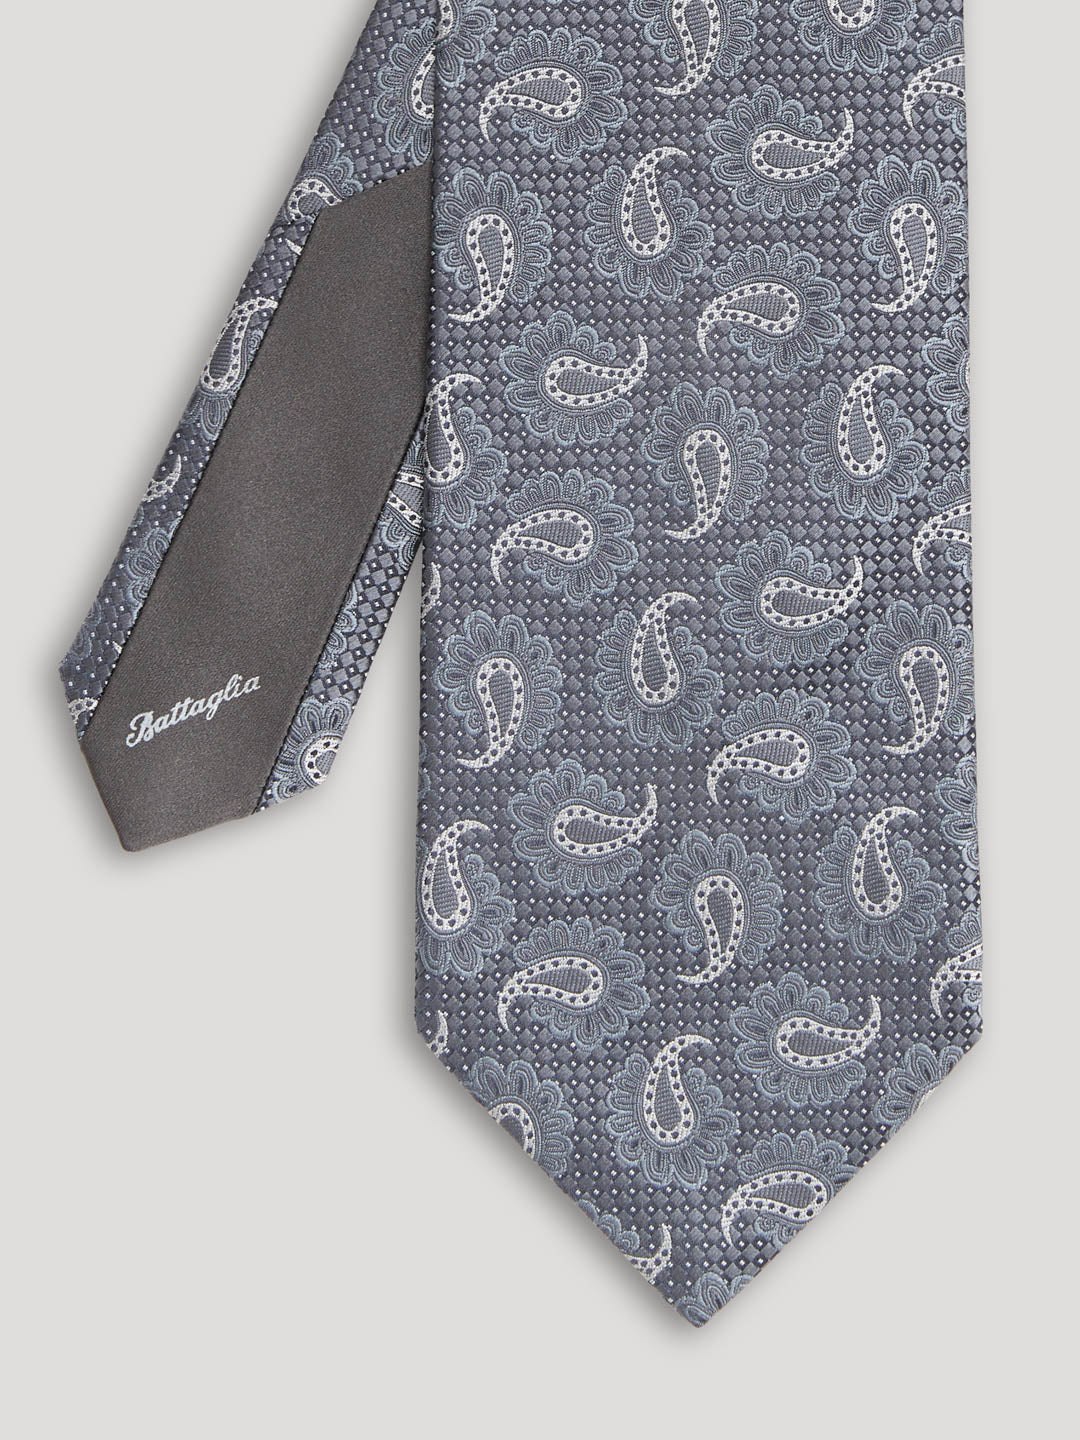 Grey paisley tie. 